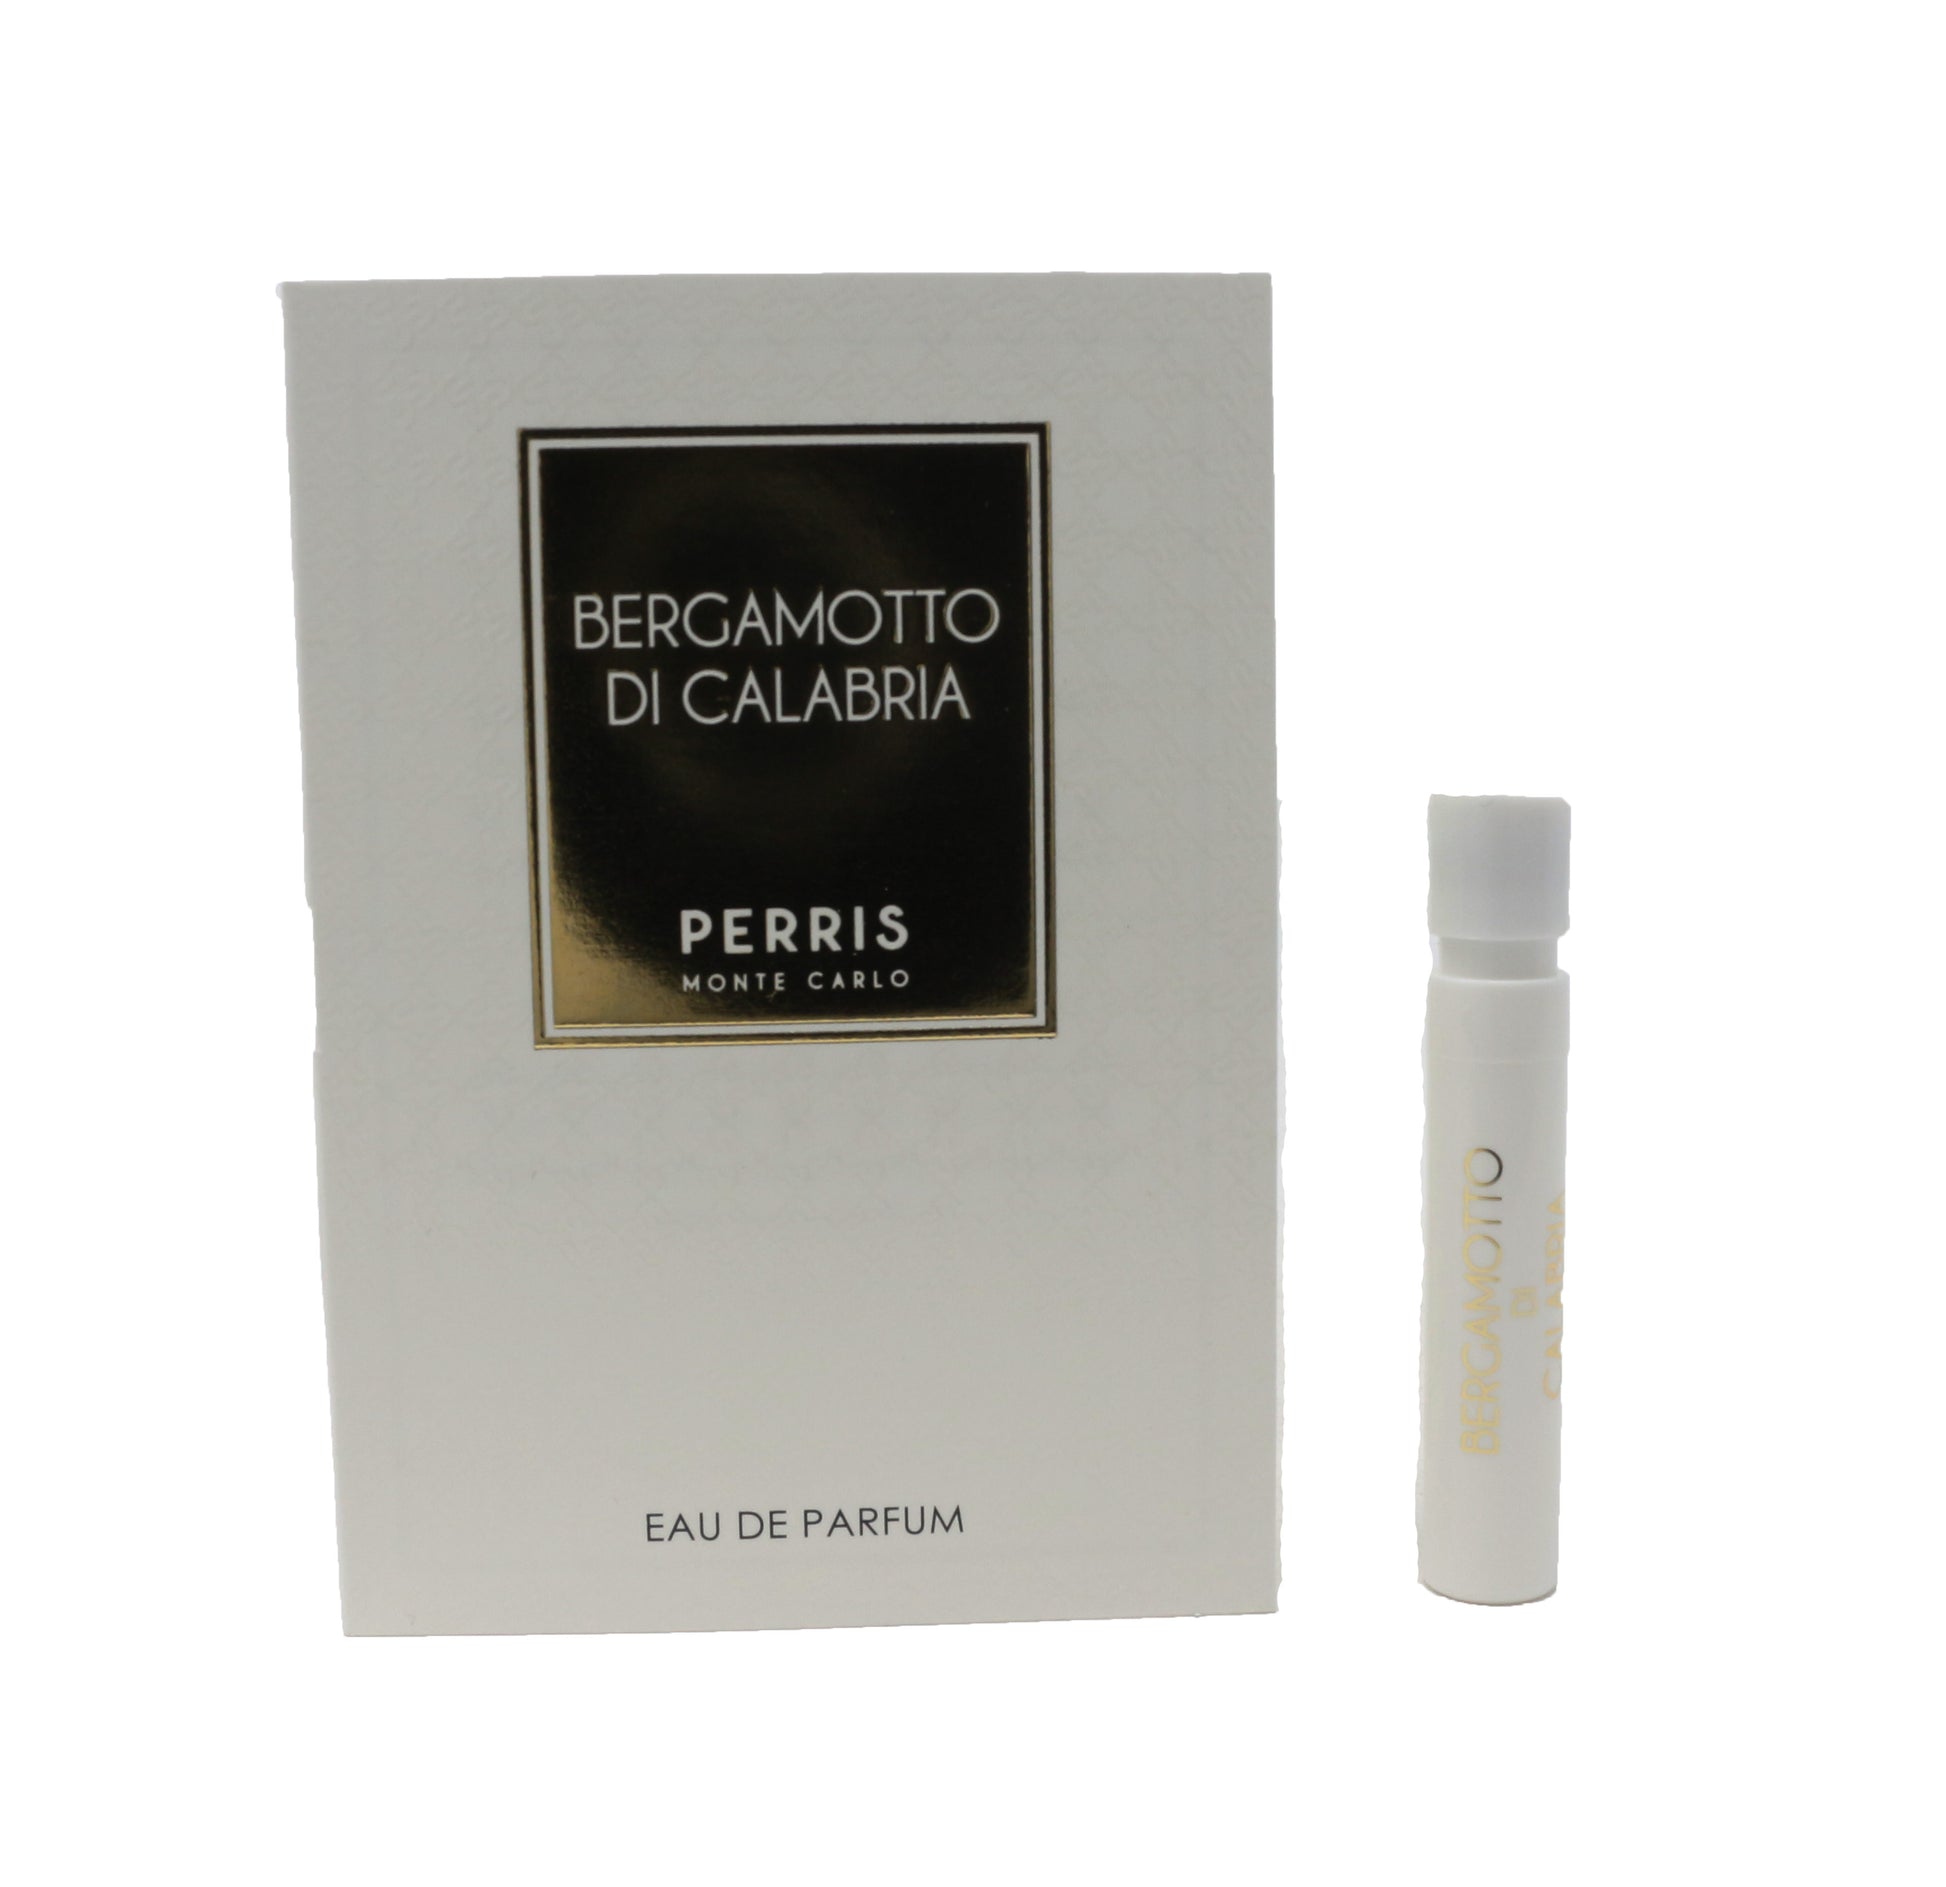 Bergamotto Di Calabria Eau De Parfum 2.5 mL